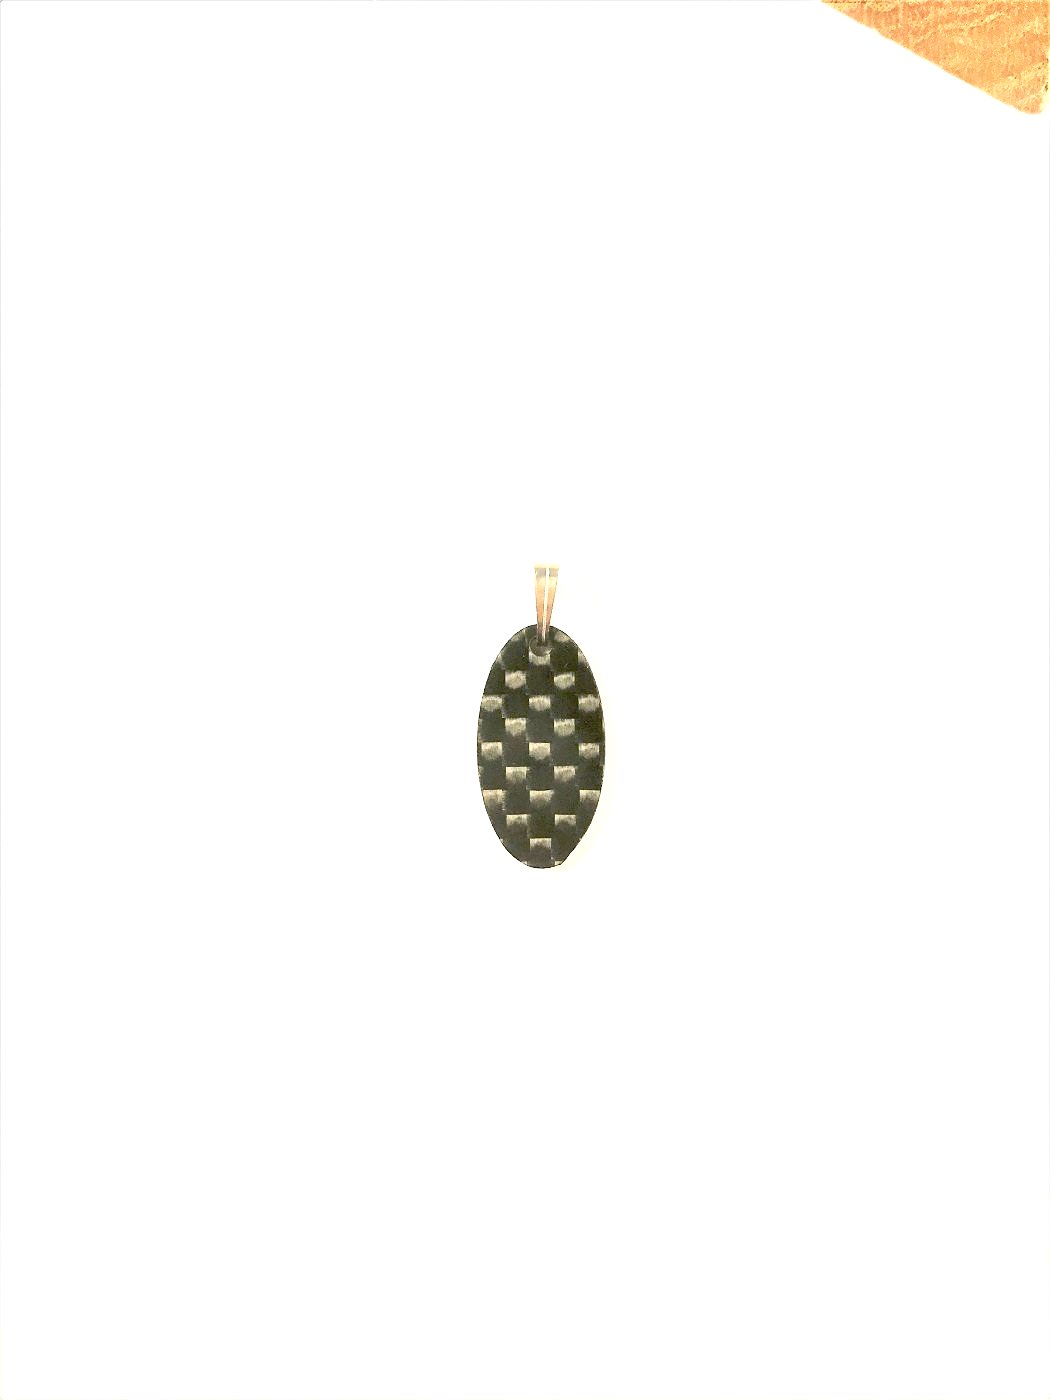 Carbon Fiber Jewels Small Egg Oval Pendentif Collier Necklace - Carbon Fiber Gift